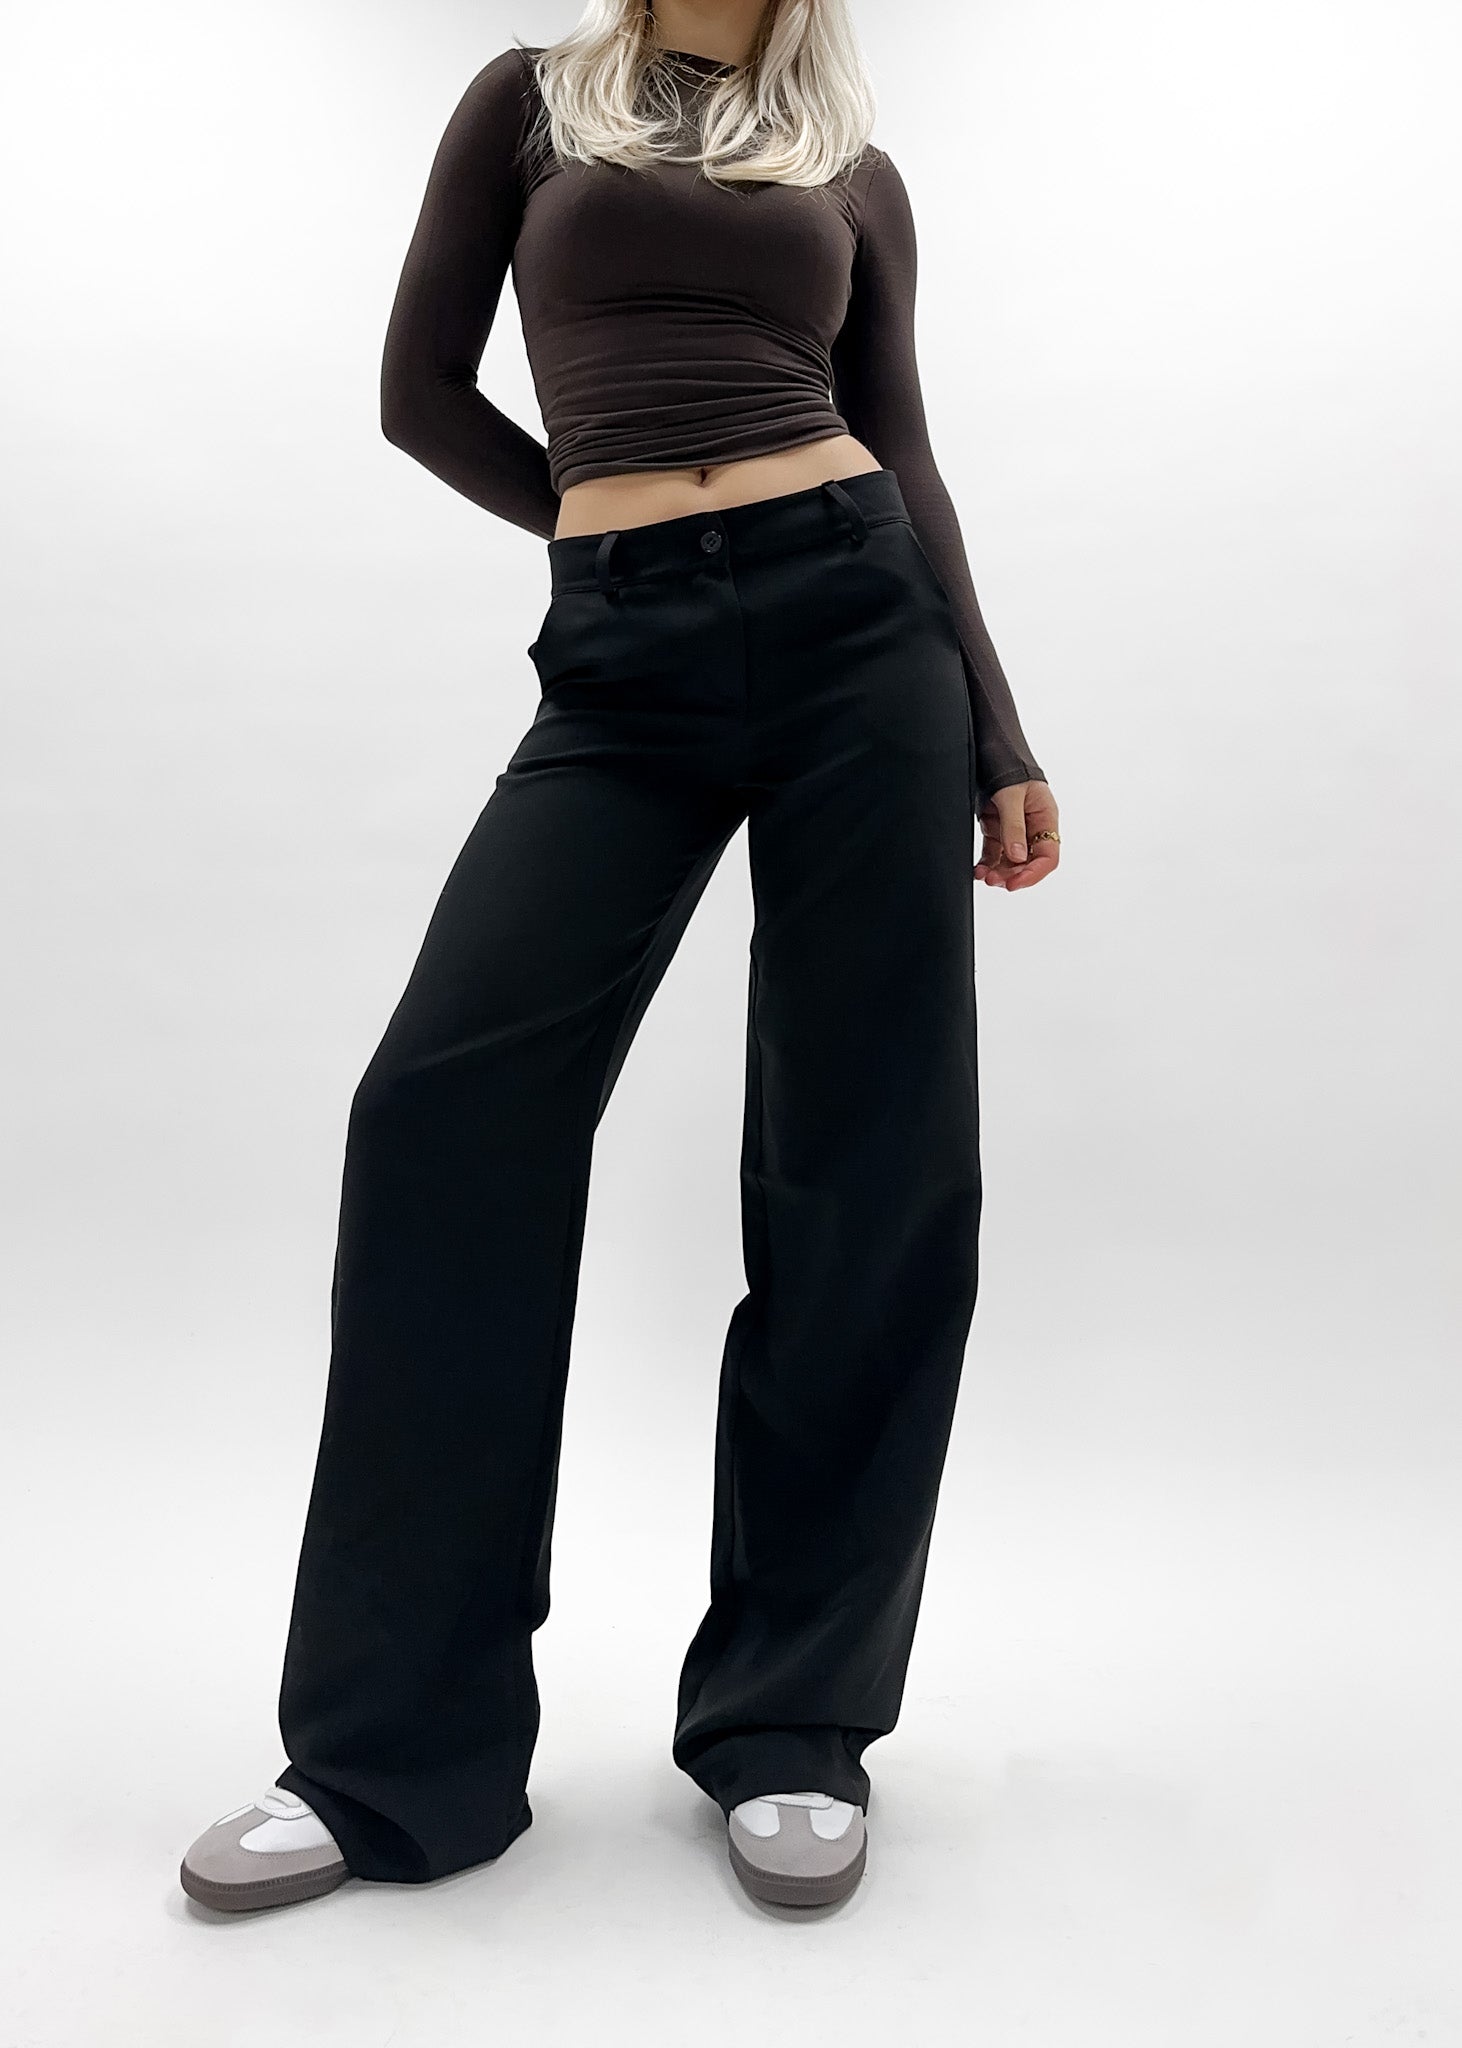  Low/mid waist straight leg pants casual schwarz (REGULAR)